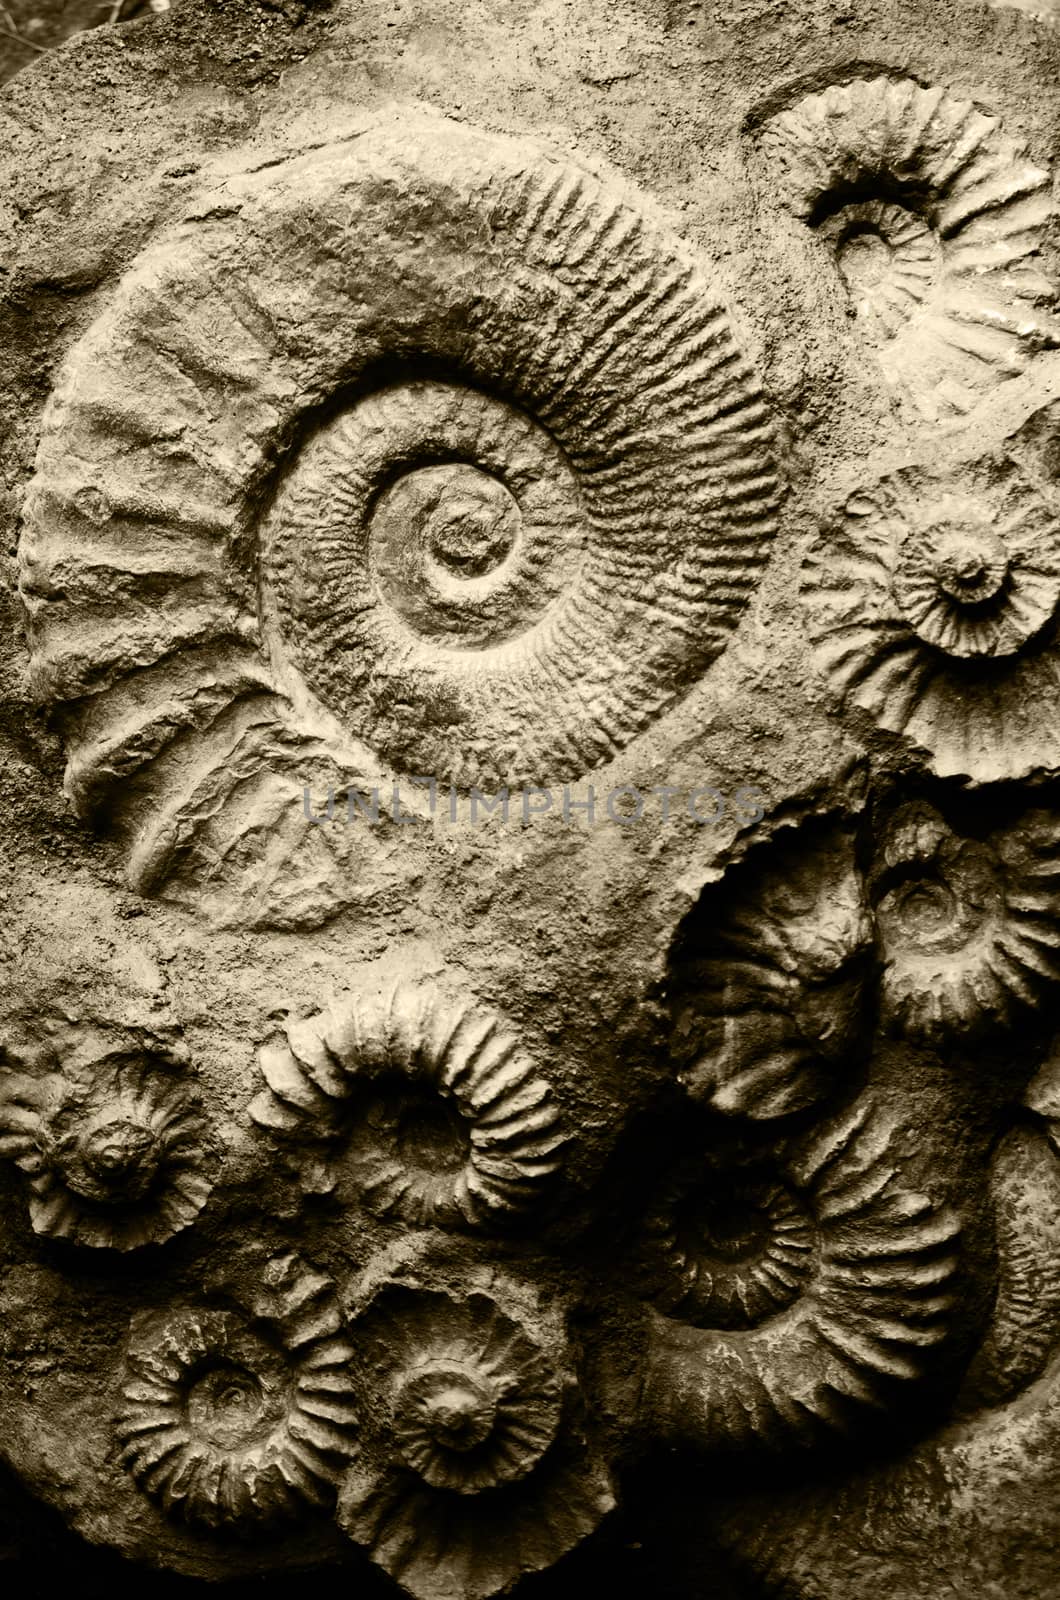 fossil ammonites by sarkao